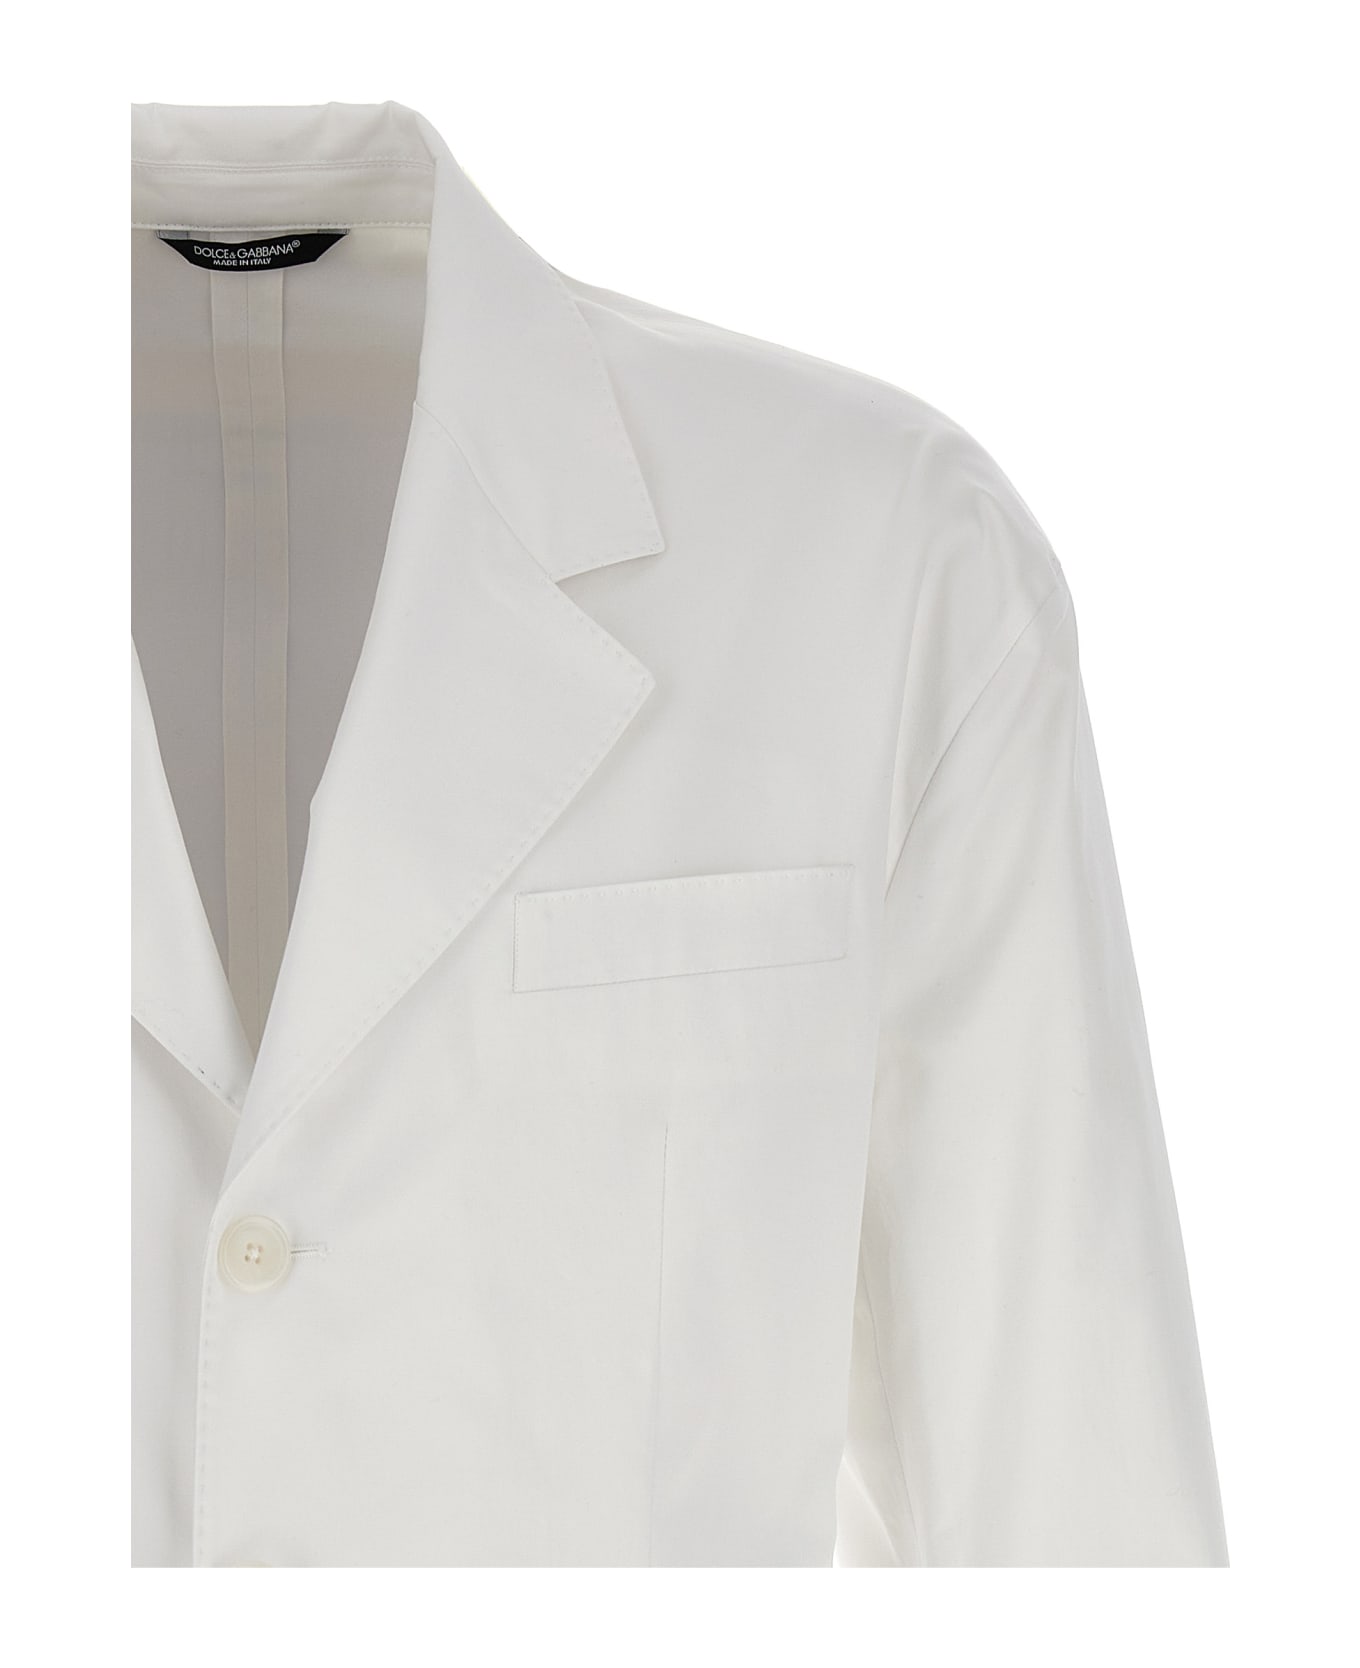 Dolce & Gabbana Gabardine Cotton Jacket - White